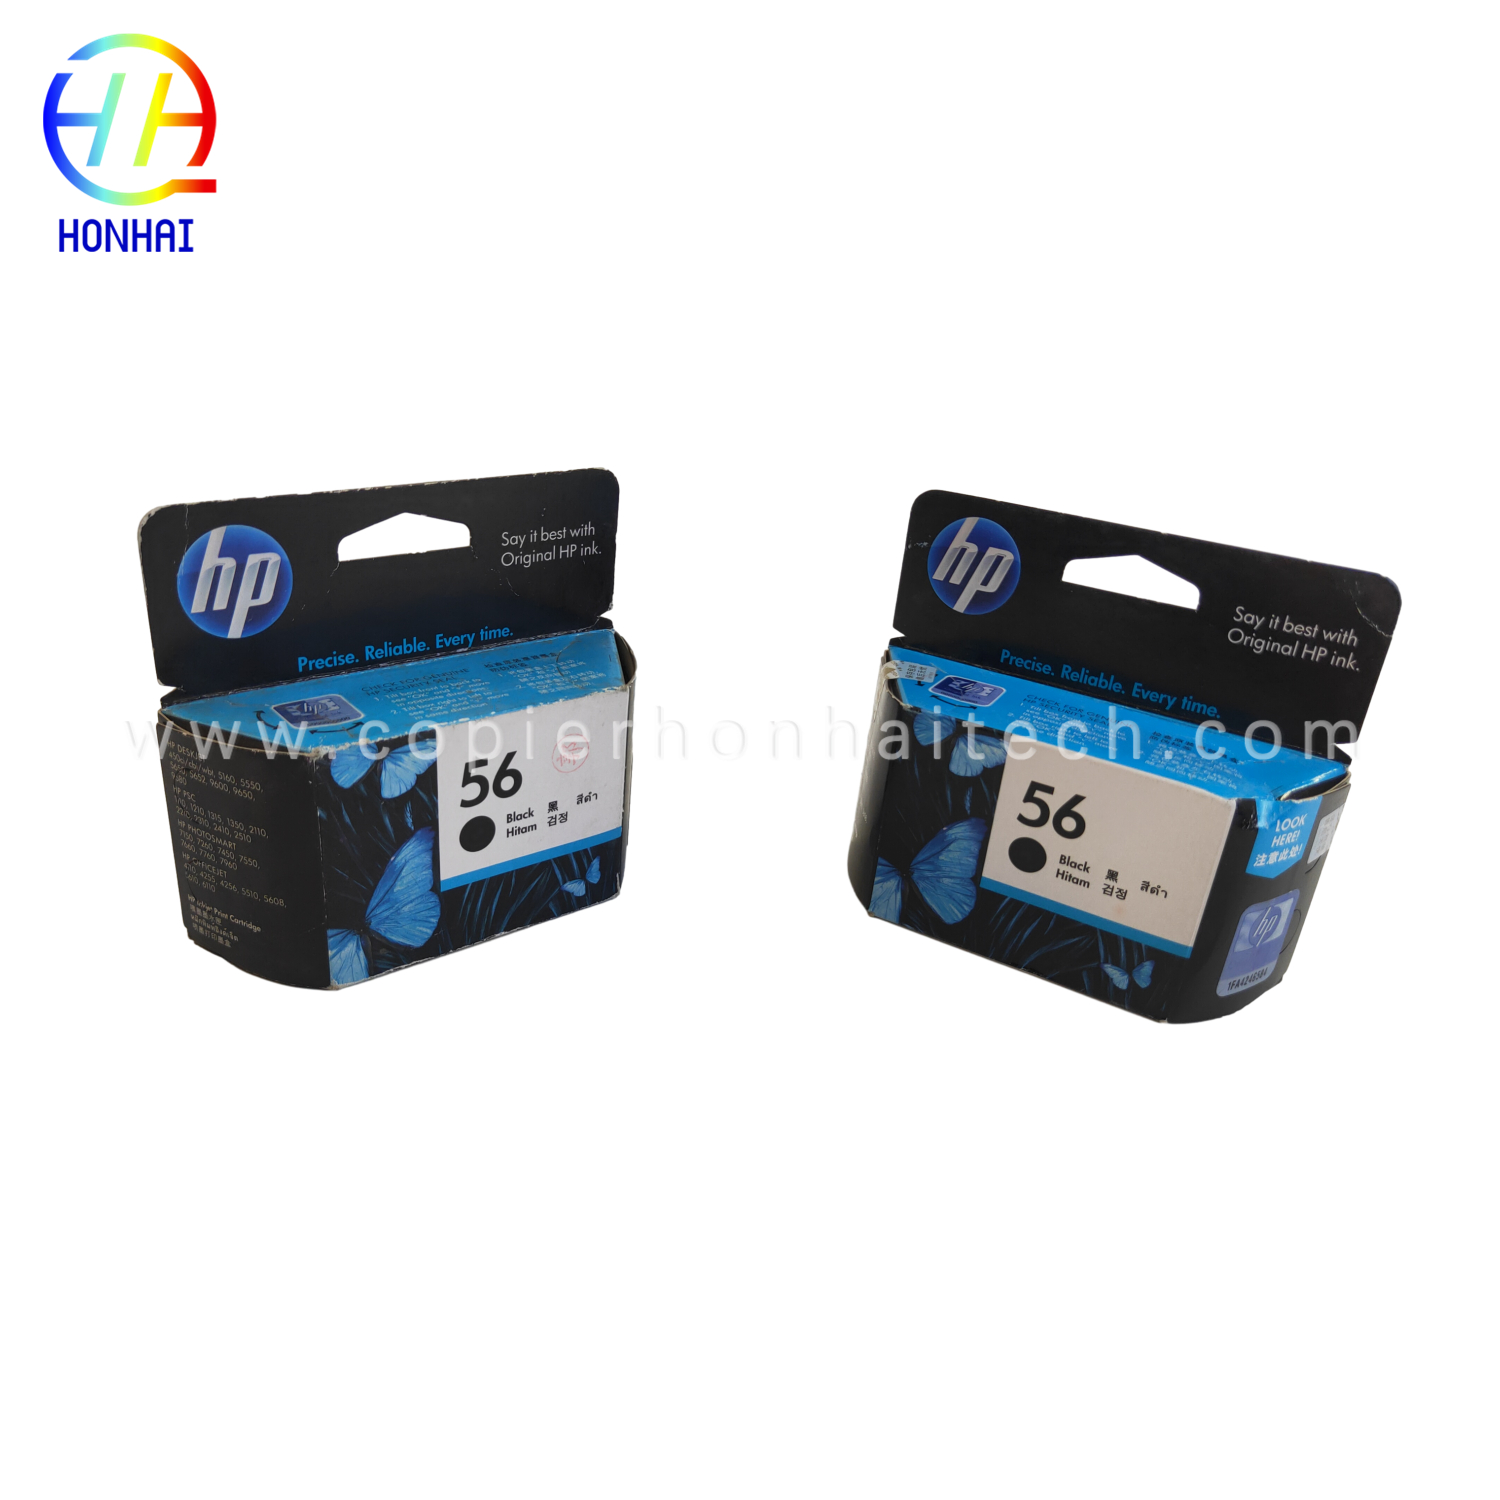 https://www.copierhonhaitech.com/origen-black-printer-ink-cartridge-56-for-hp-deskjet-5550-5551-5552-product/